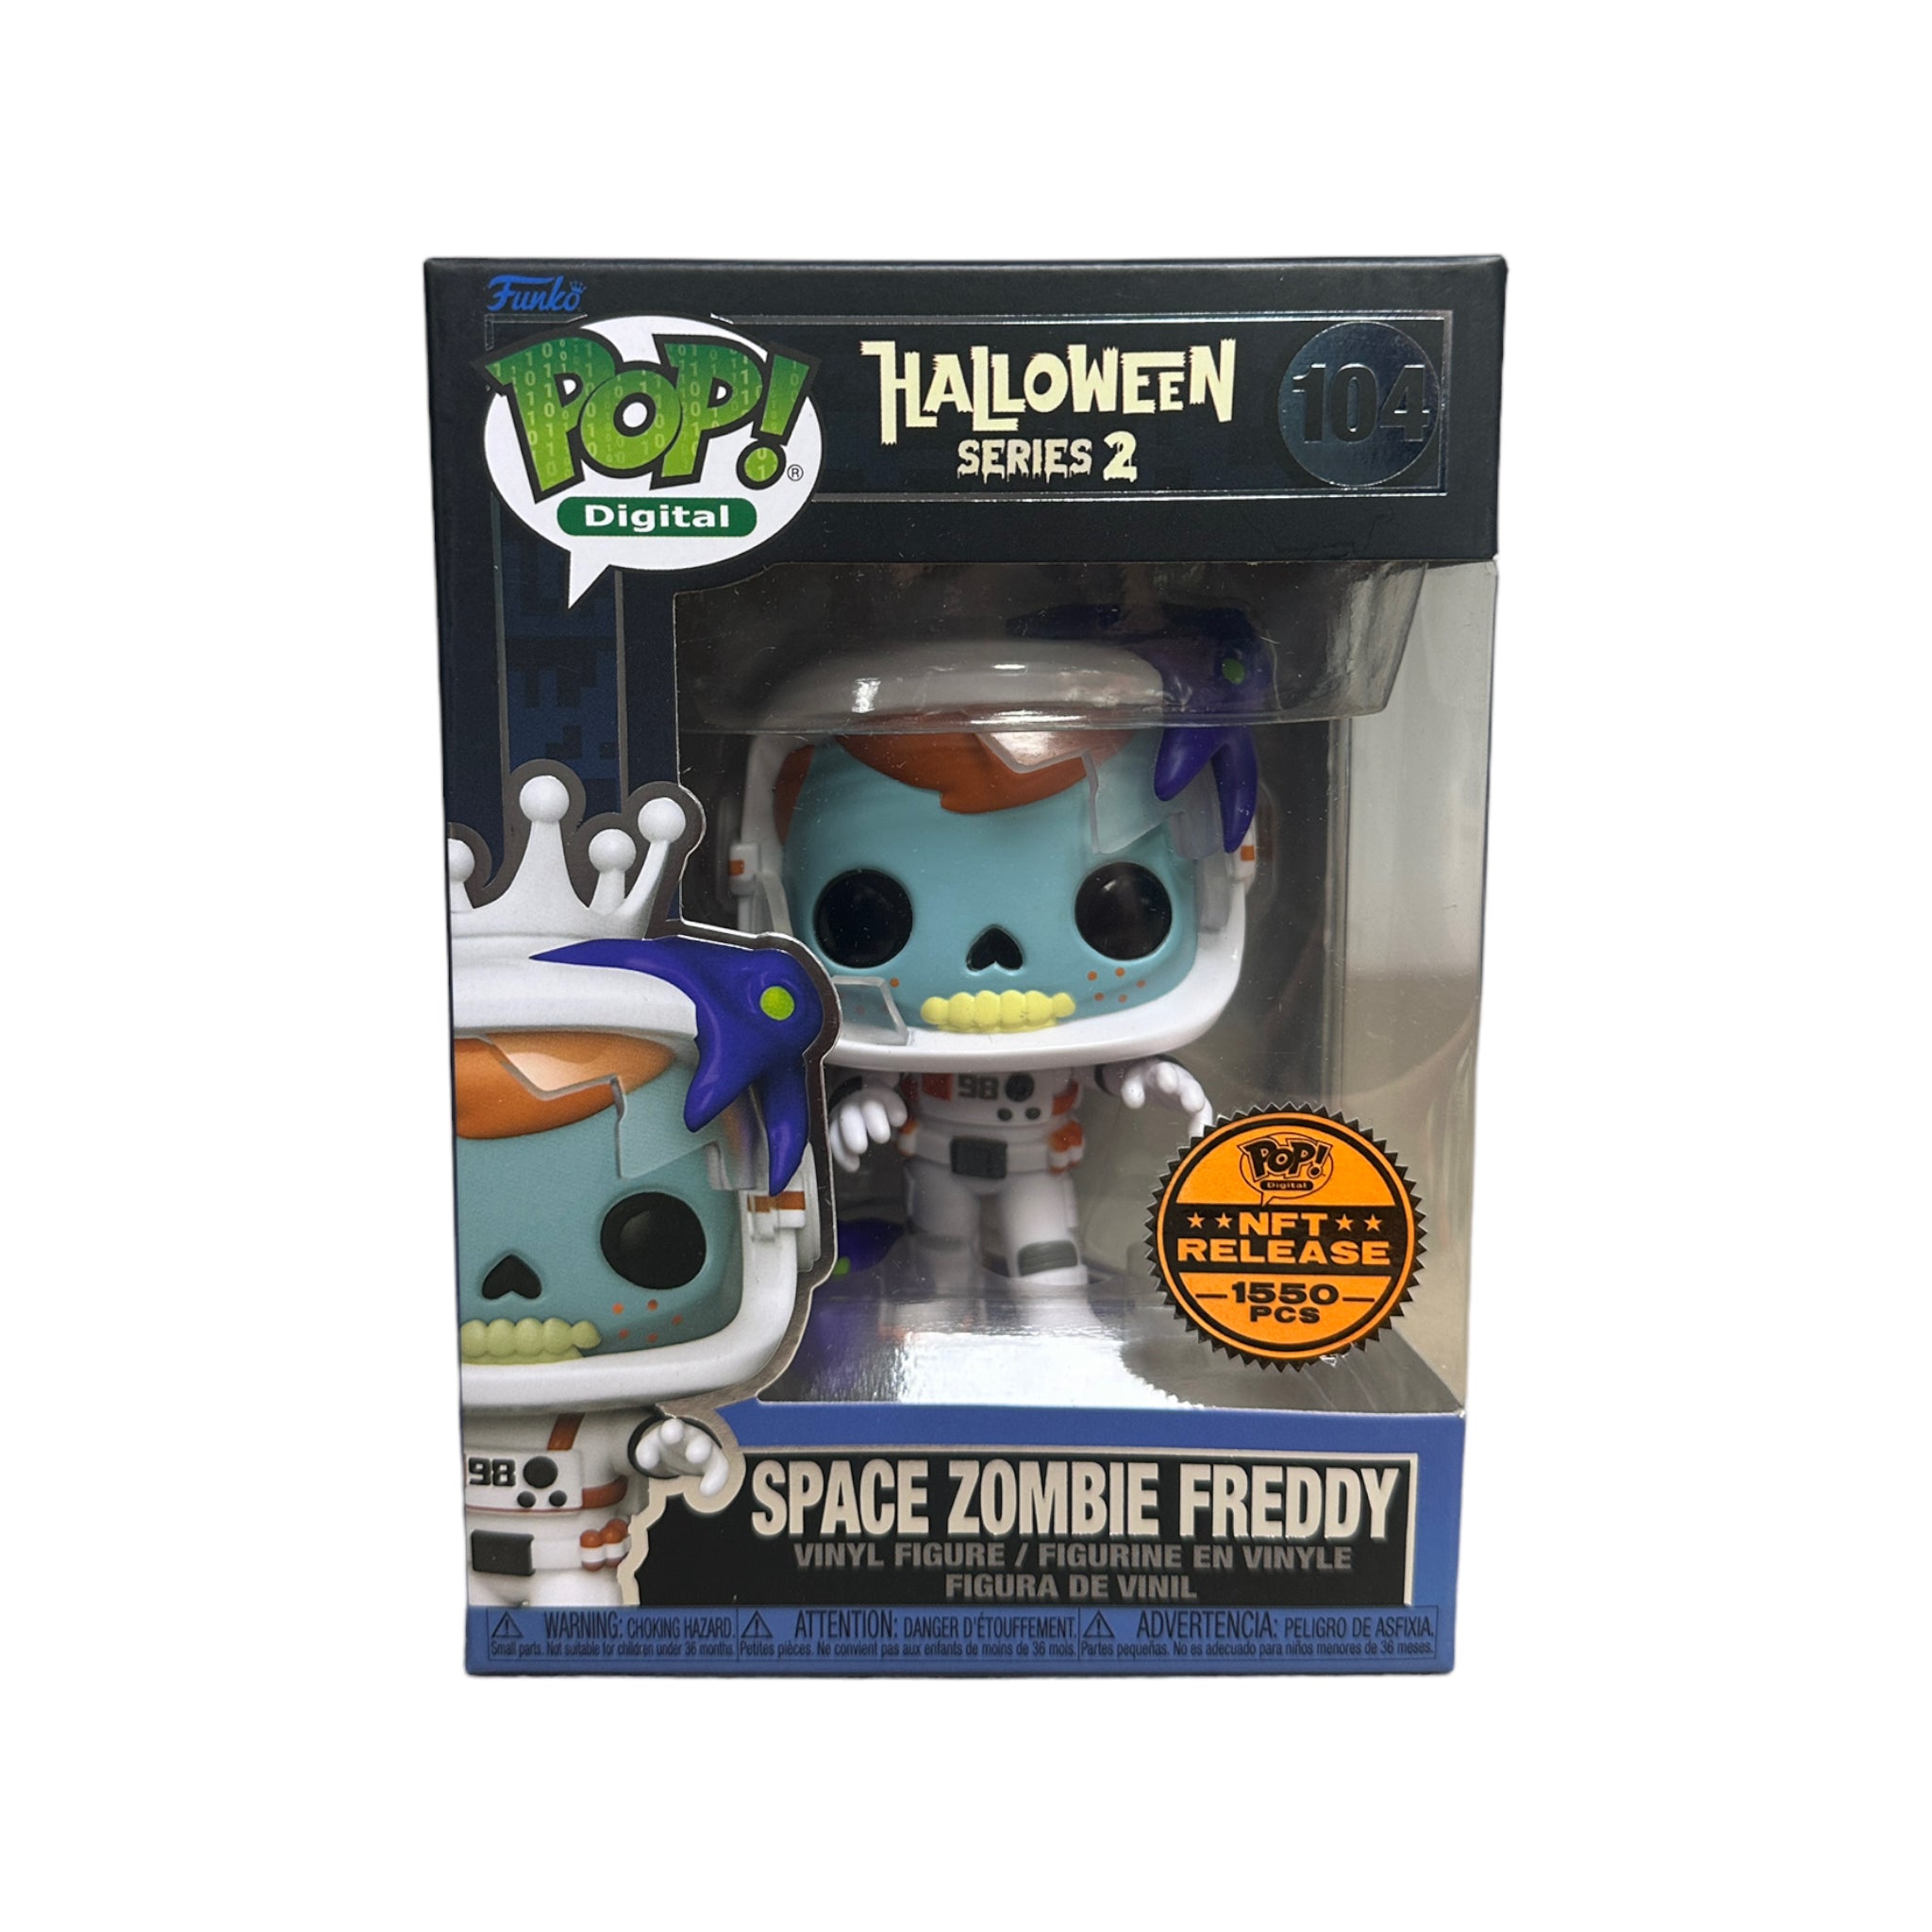 Space Zombie Freddy #104 Funko Pop! - Halloween Series 2 - NFT Release Exclusive LE1550 Pcs - Condition 8.5/10